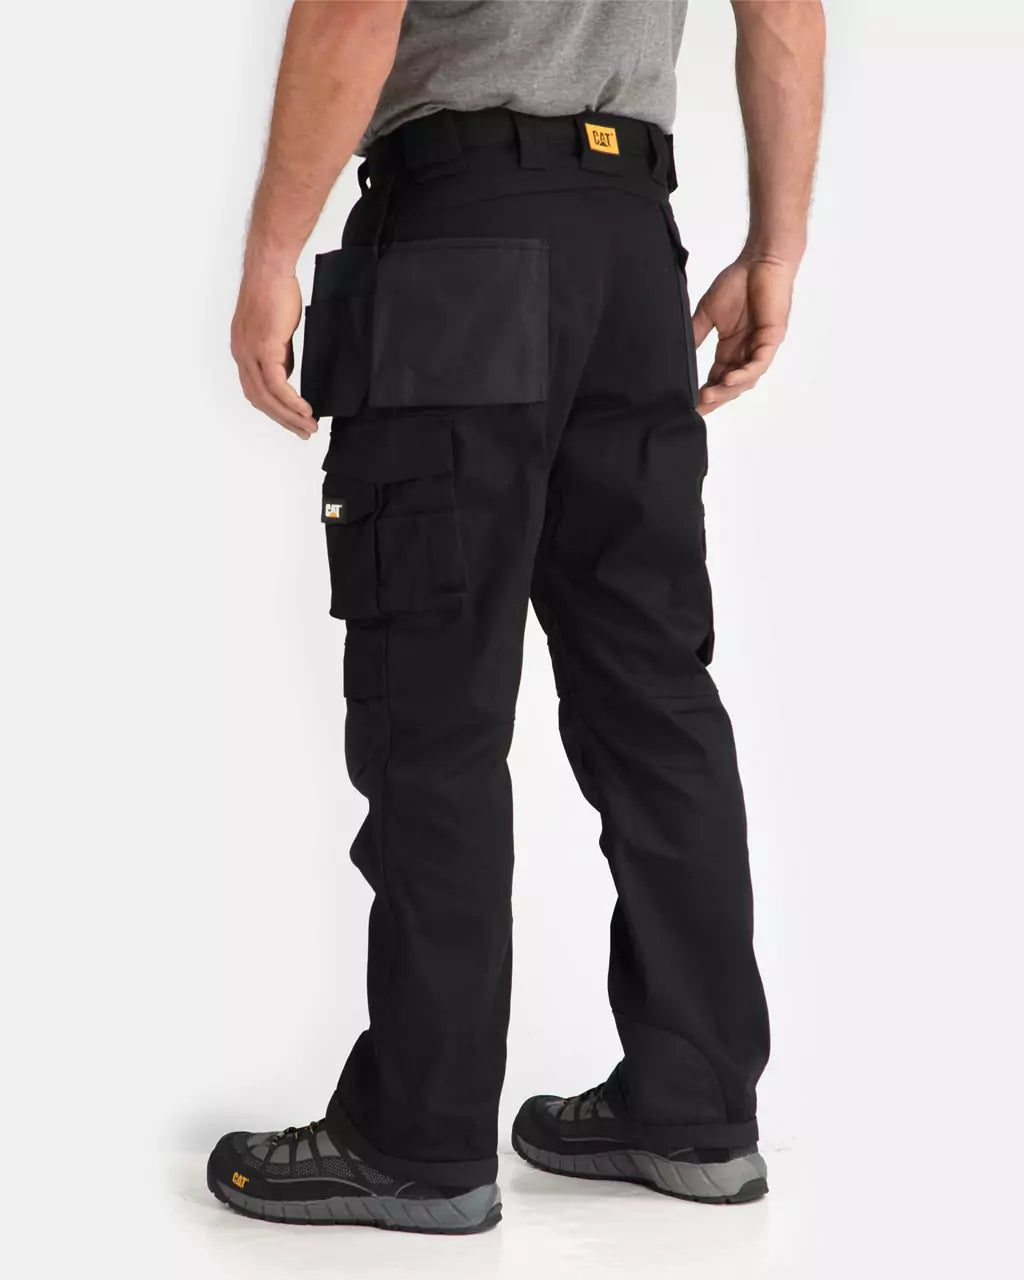  Caterpillar Men's Elite Operator Work Pants, Khaki : Clothing,  Shoes & Jewelry